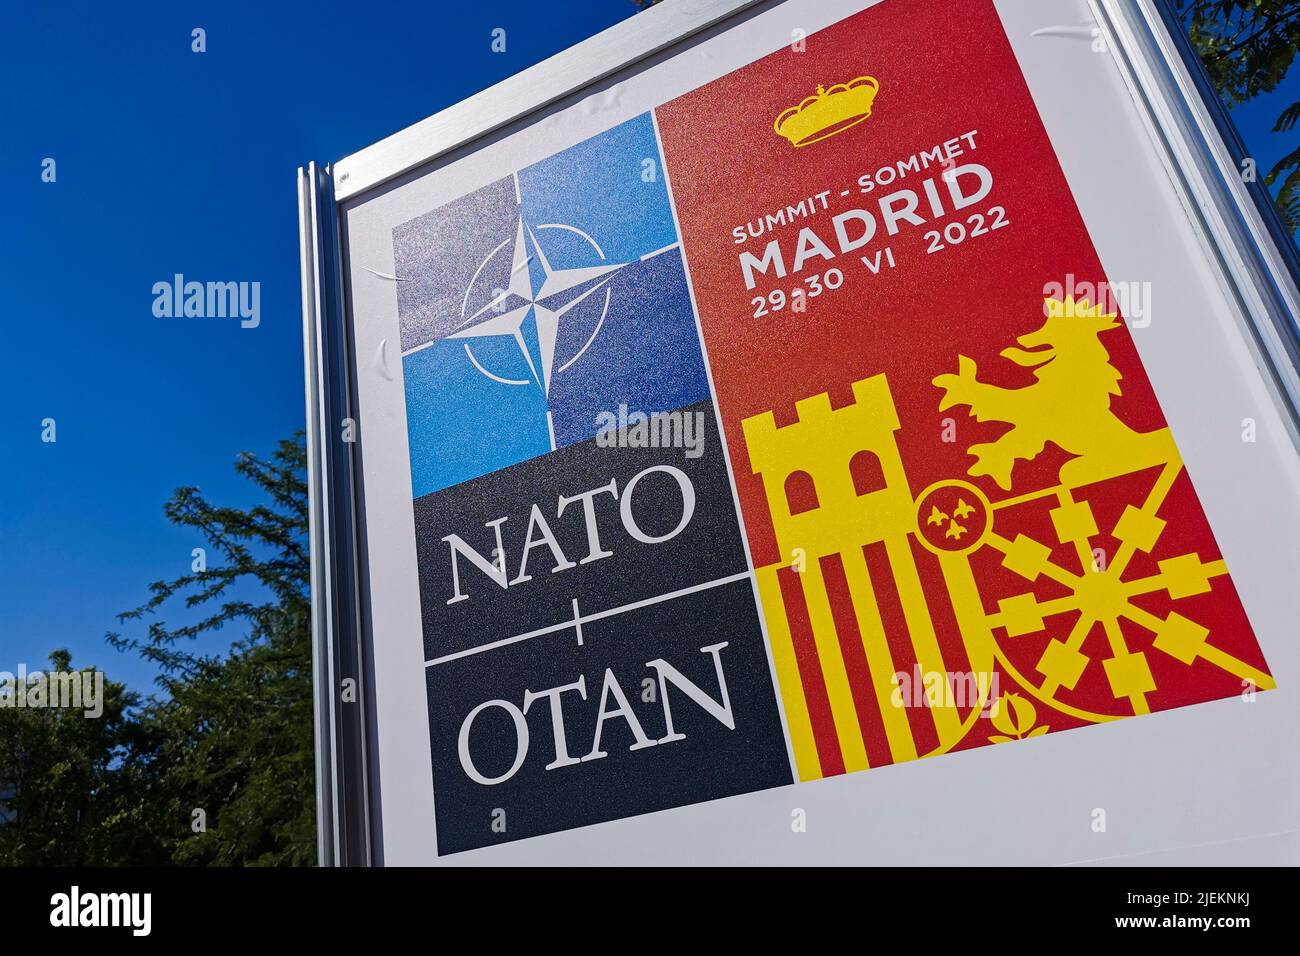 Madrid, Krakow, Spain. 27th June, 2022. NATO Summit official logo is seen on a board two days ahead of the official event in Madrid, Spain on June 27, 2022. (Credit Image: © Beata Zawrzel/ZUMA Press Wire) Stock Photo